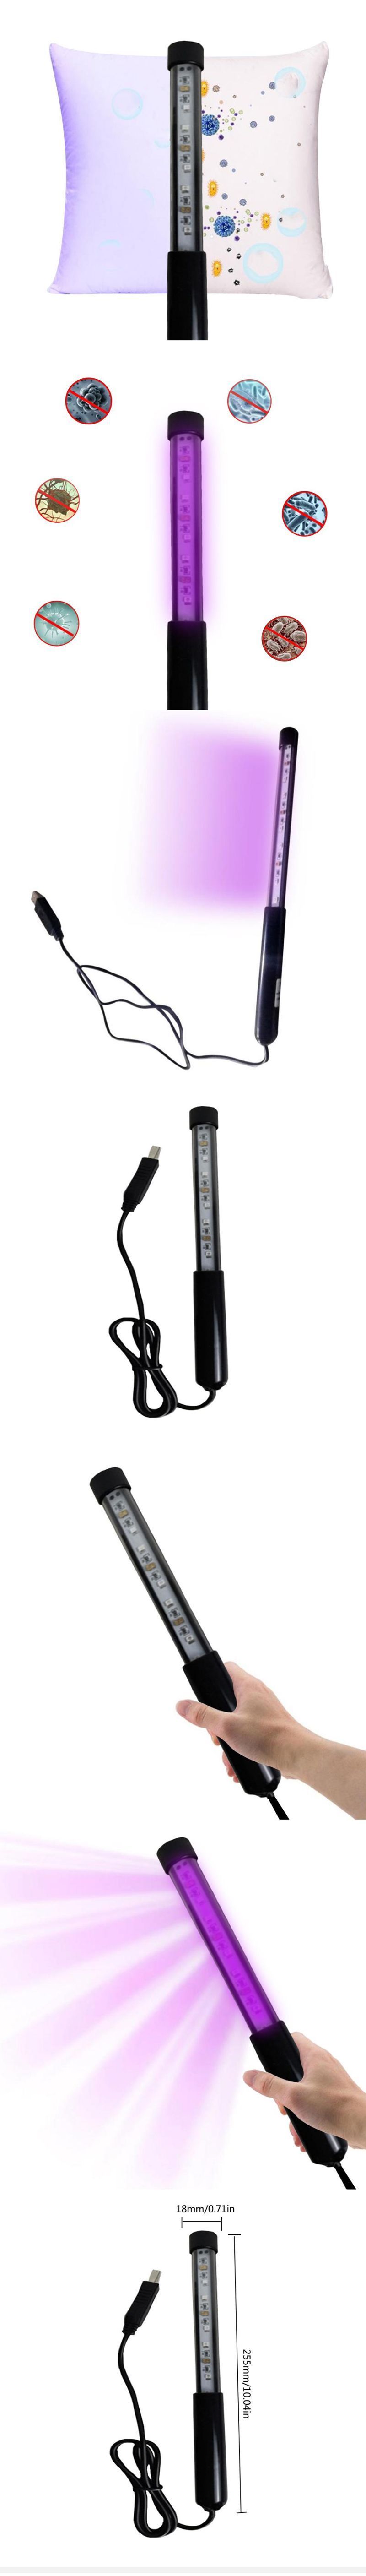 XANESreg-3W-Portable-UVC-Ultraviolet-Sterilization-Lamp-Handheld-USB-UV-Sterilizer-Light-For-Disinfe-1663326